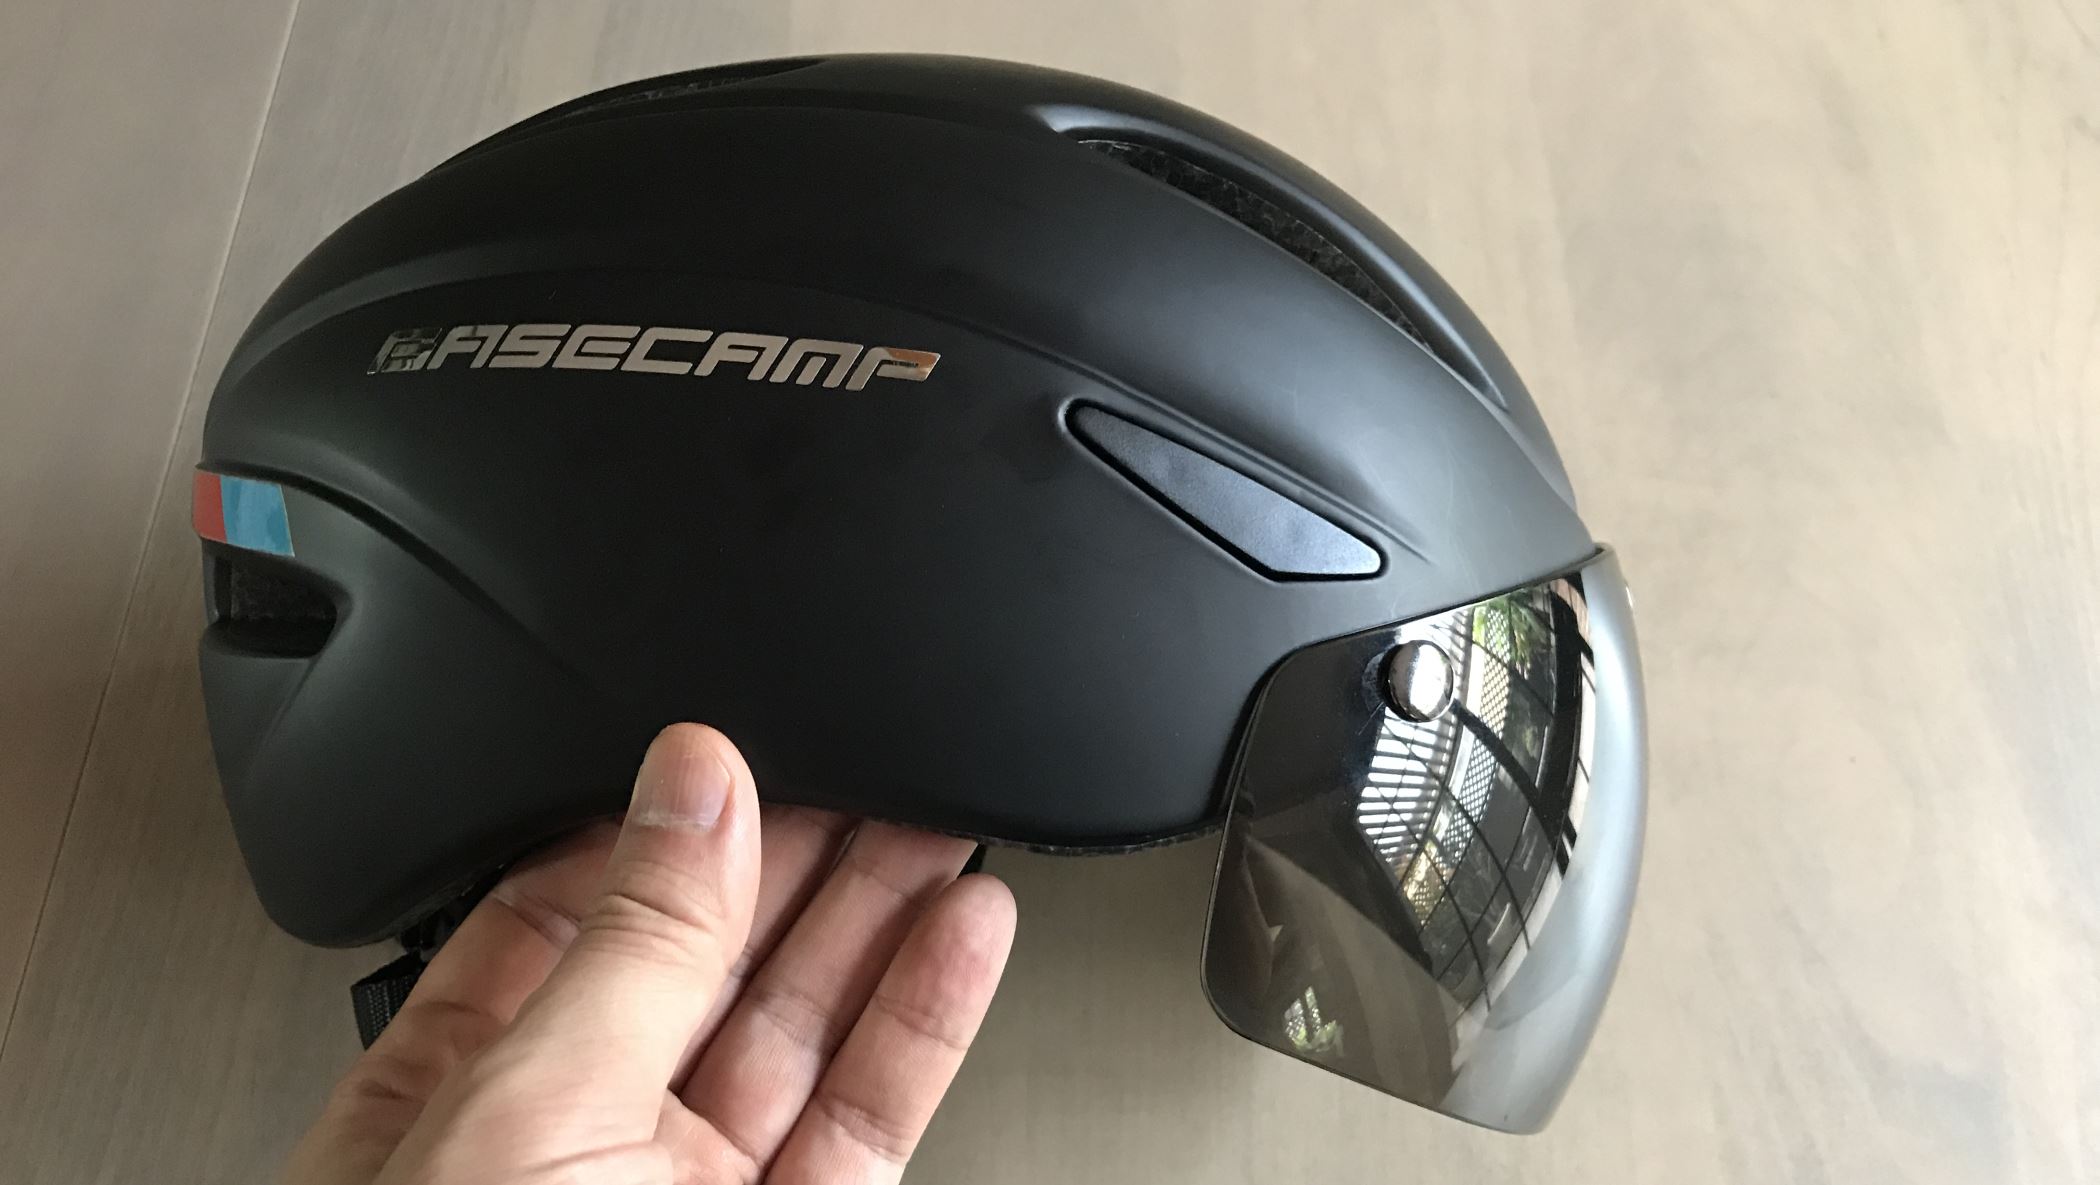 BaseCamp Bike Helmet BC-001 with Visor size M/L 56-62 cm 